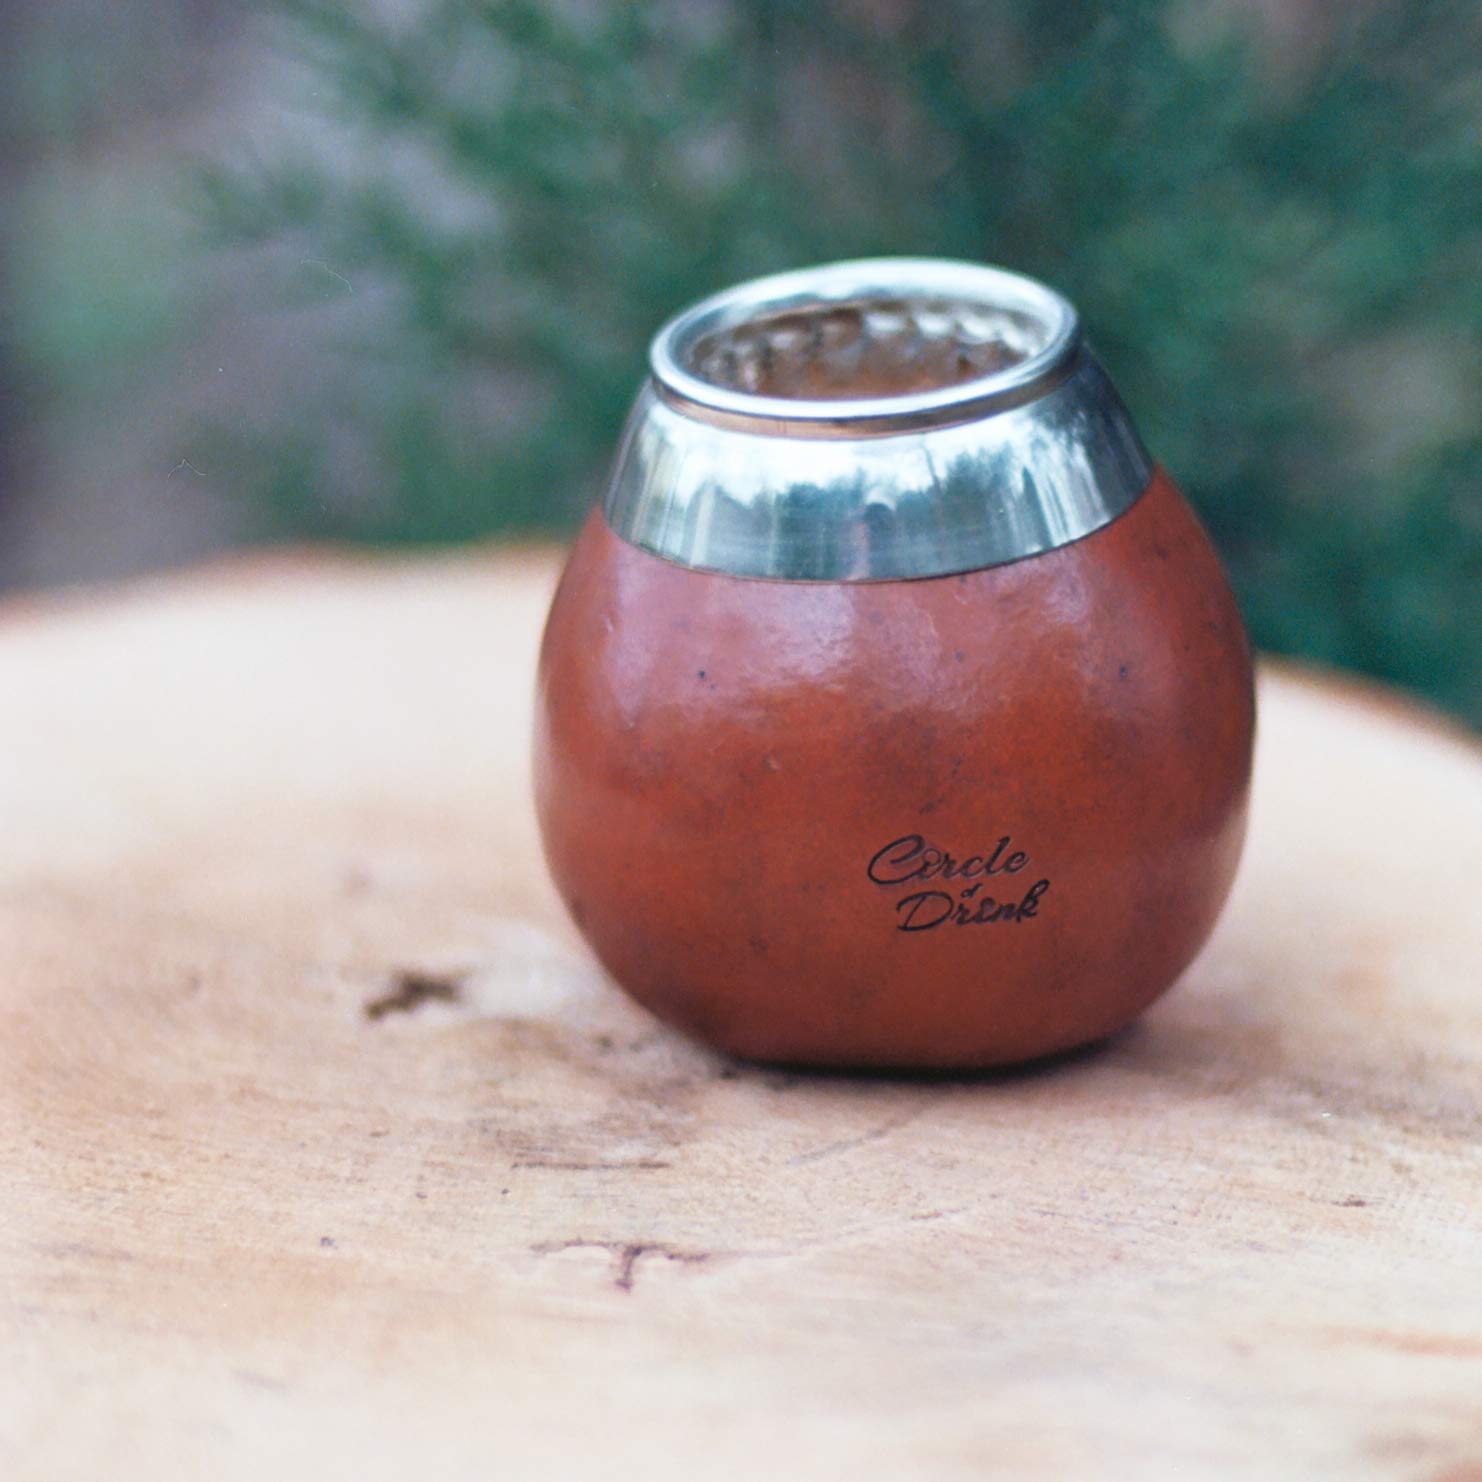 Circle of Drink - Sabi Cup Mocha - Authentic Handcrafted Calabash Yerba Mate Gourd - Alpaca Silver Brim - 50g, 10oz Capacity (MOCHA)